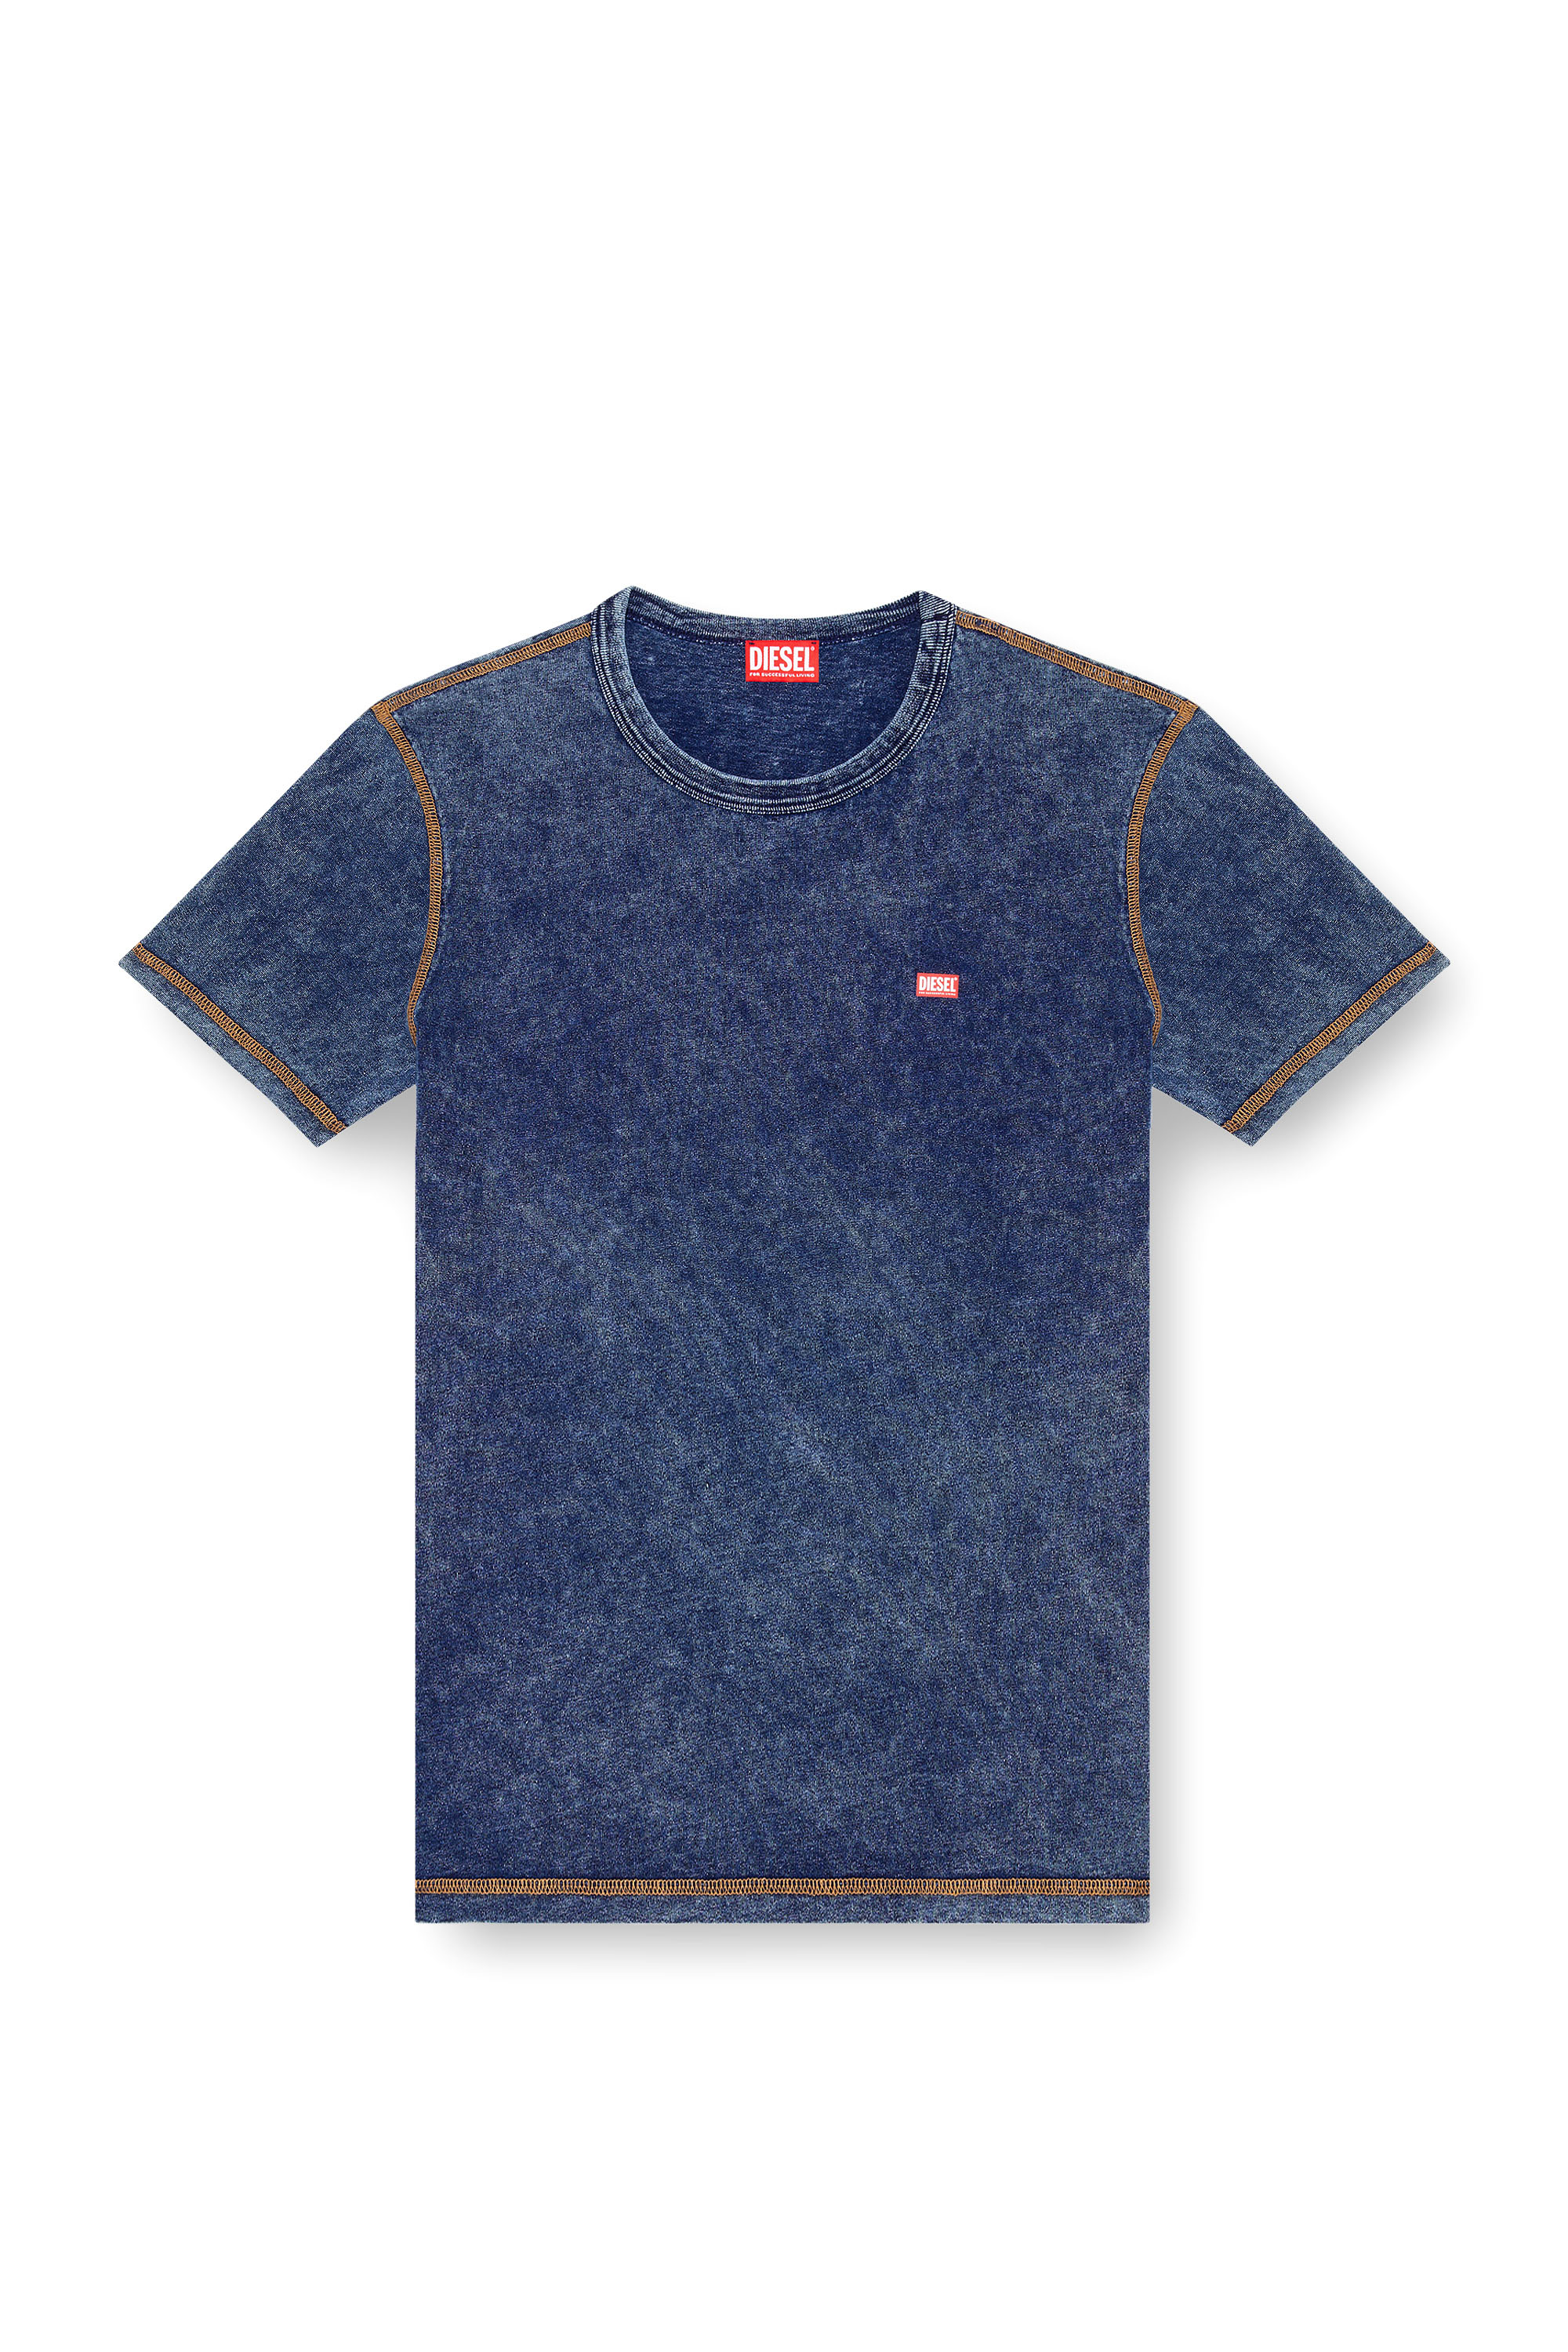 Diesel - T-ADJUST-Q12, Male T-shirt with denim effect in ブルー - Image 3